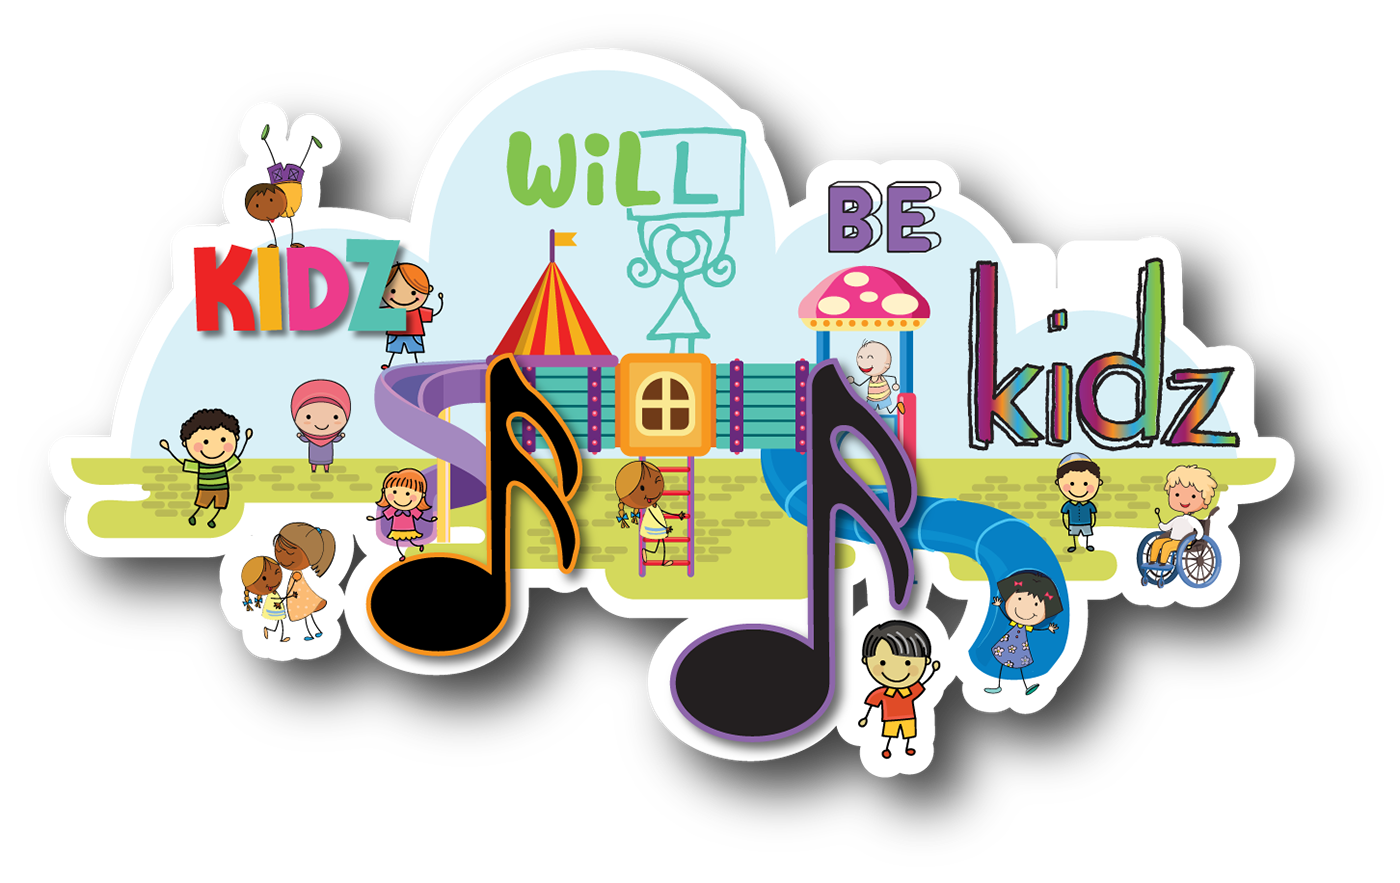 brand identity cheerful childlike colorful creative energetic imaginative Logo Design Playful whimsical